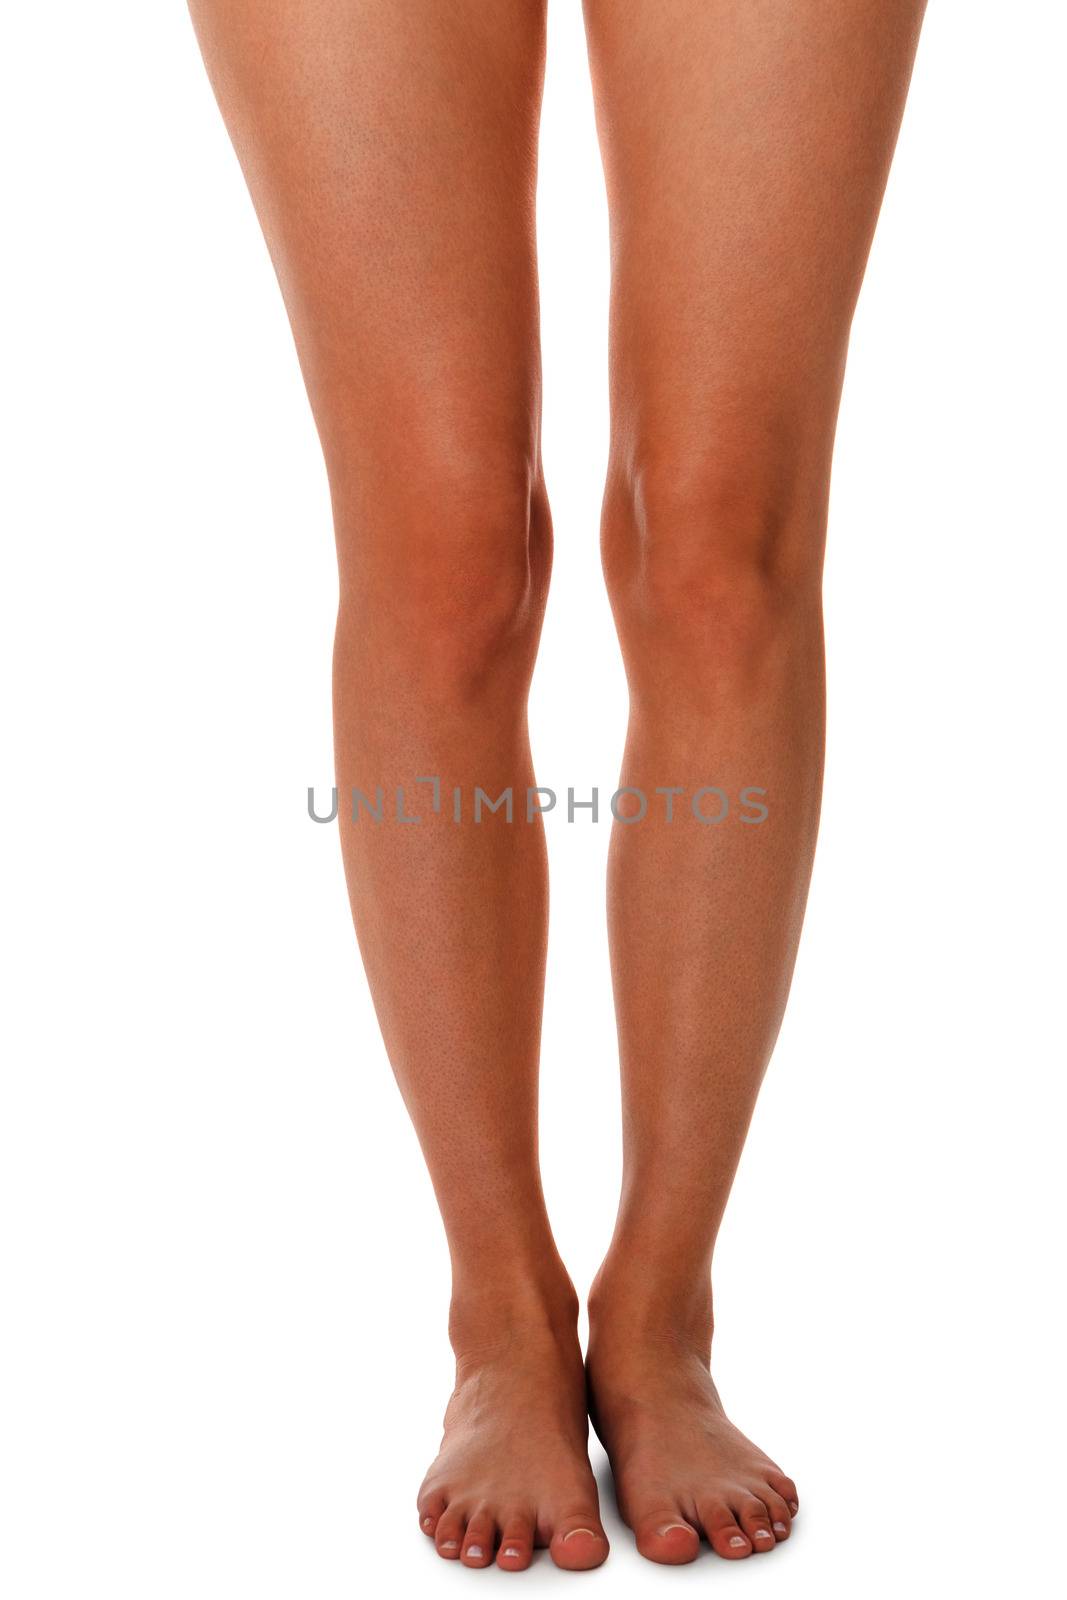 Elegant long bare female legs by juniart